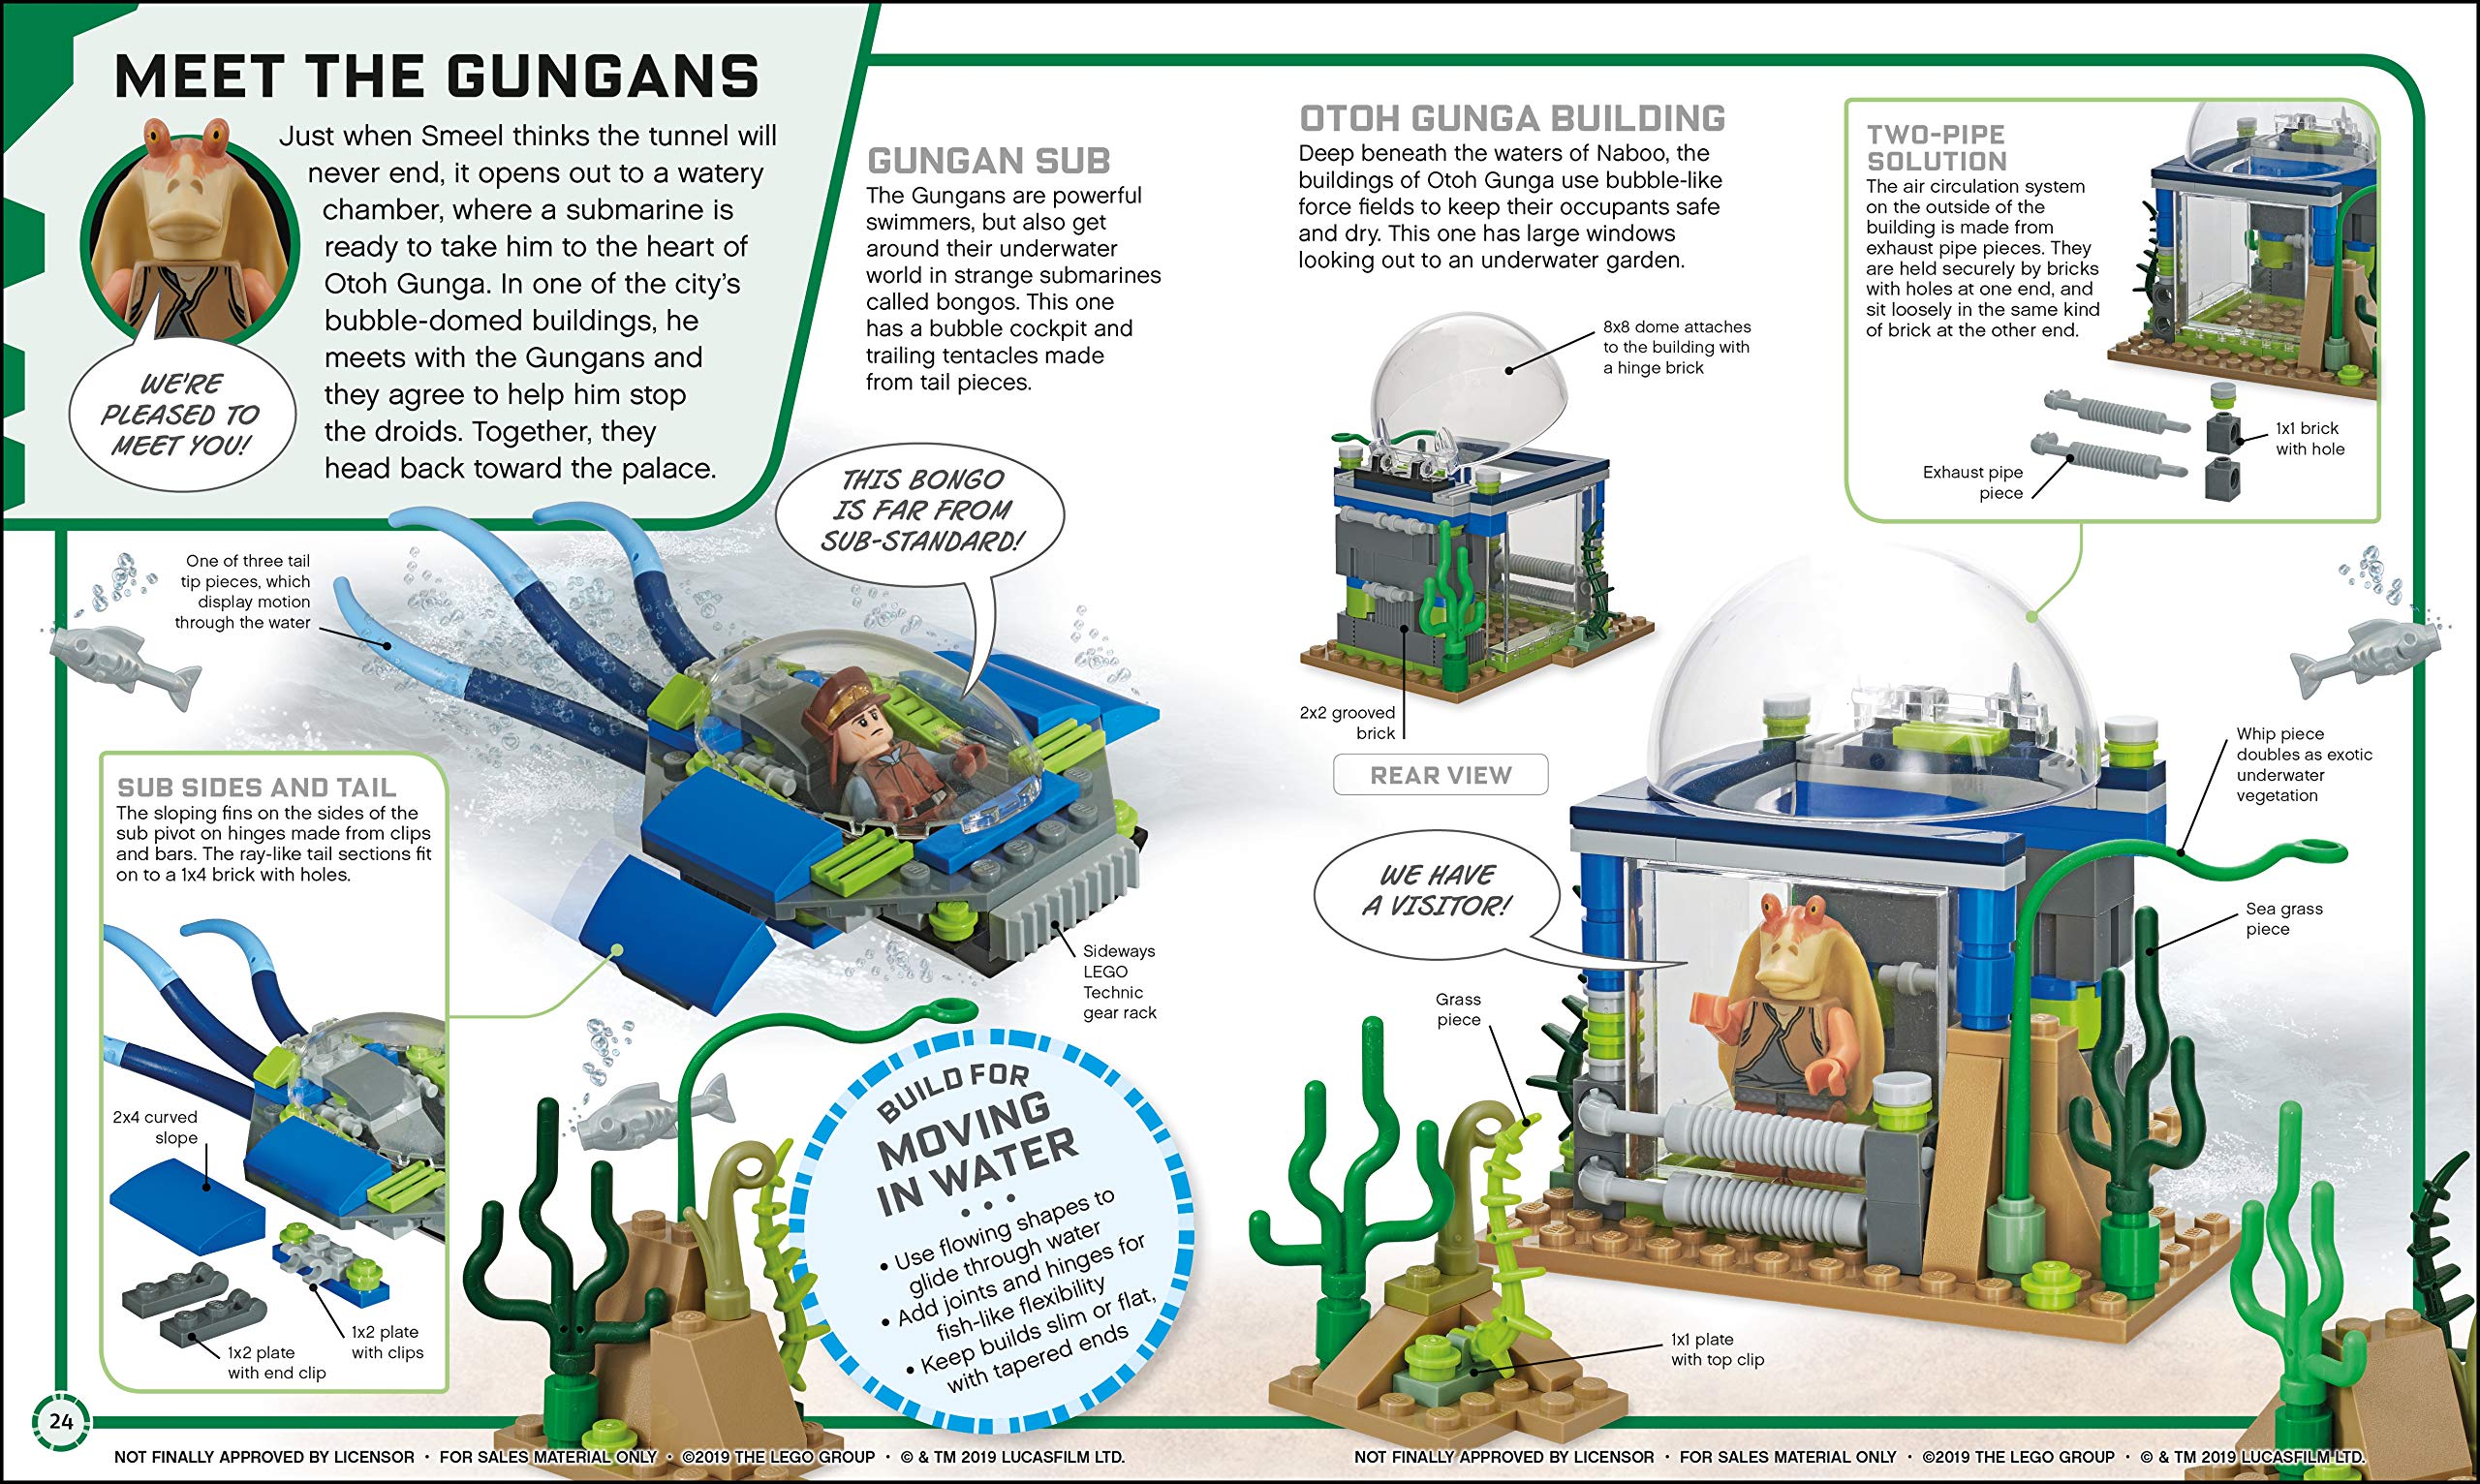 Comprar Lego® Star Wars: Space Adventures (Activity Book With